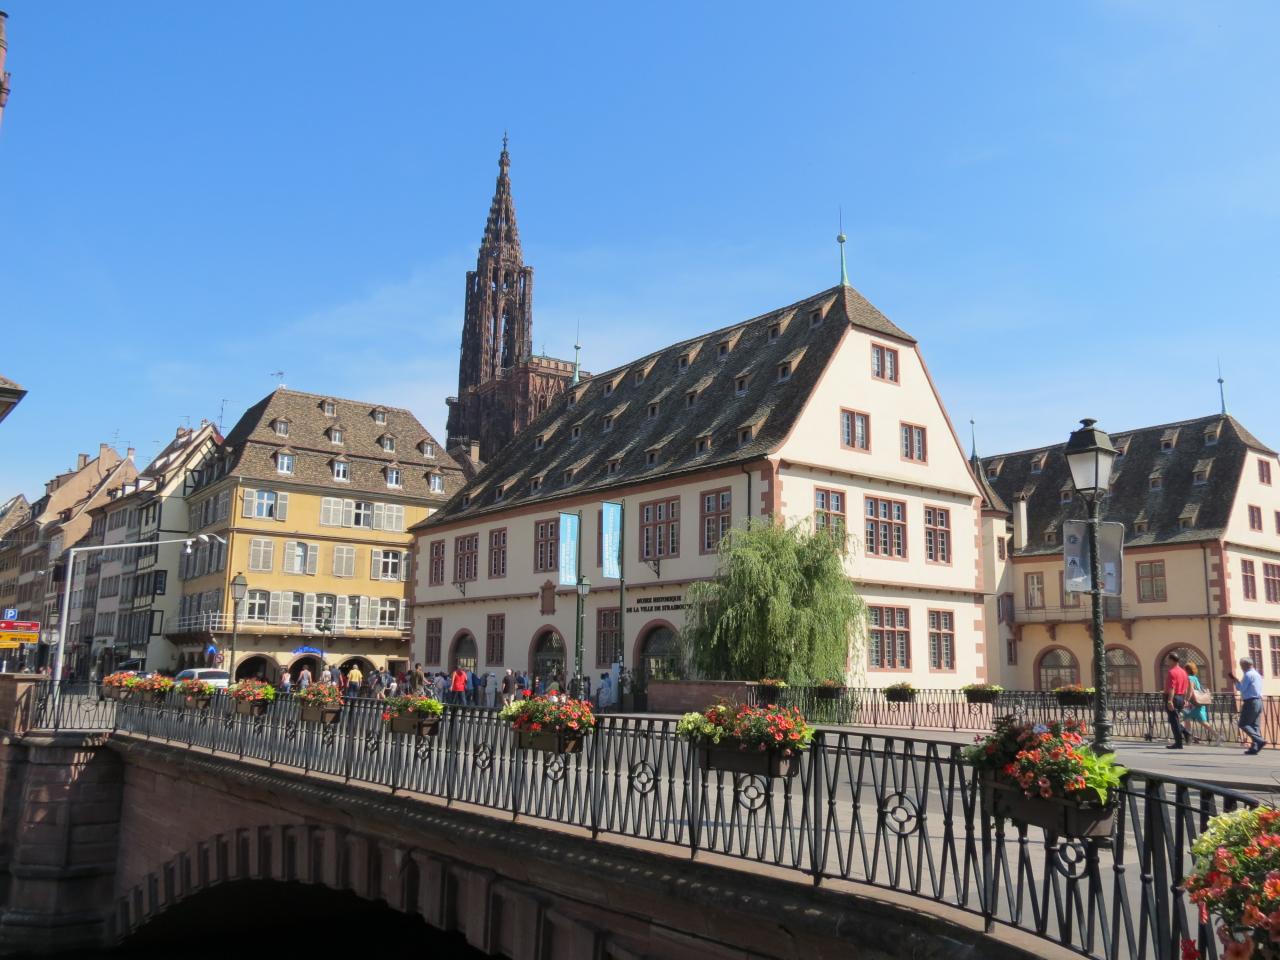 Strasbourg  